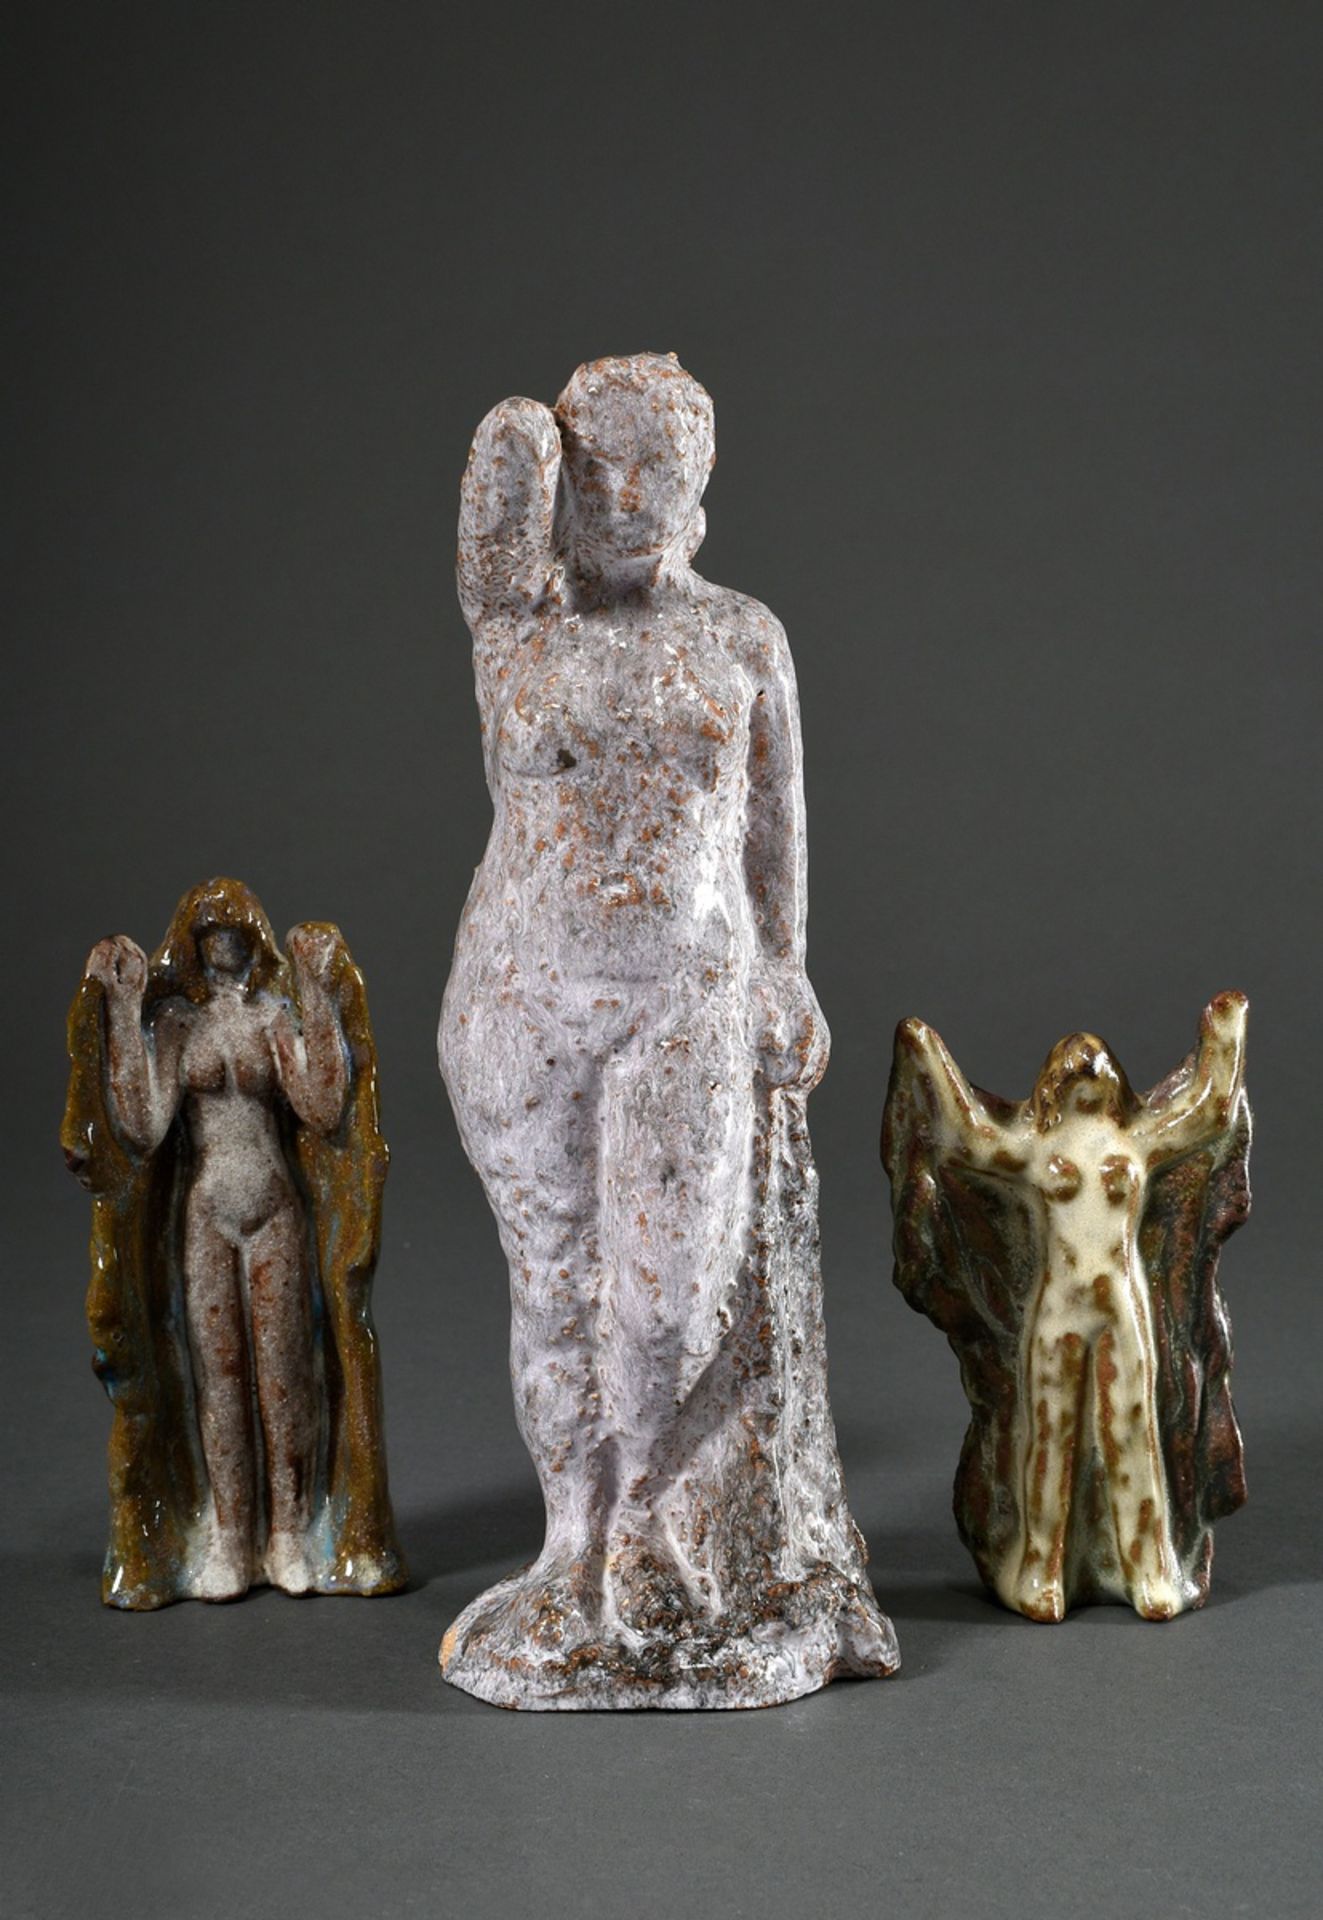 3 Various Maetzel, Monika (1917-2010) figures "Female nude with cloth", ceramic light glazed, 2x in